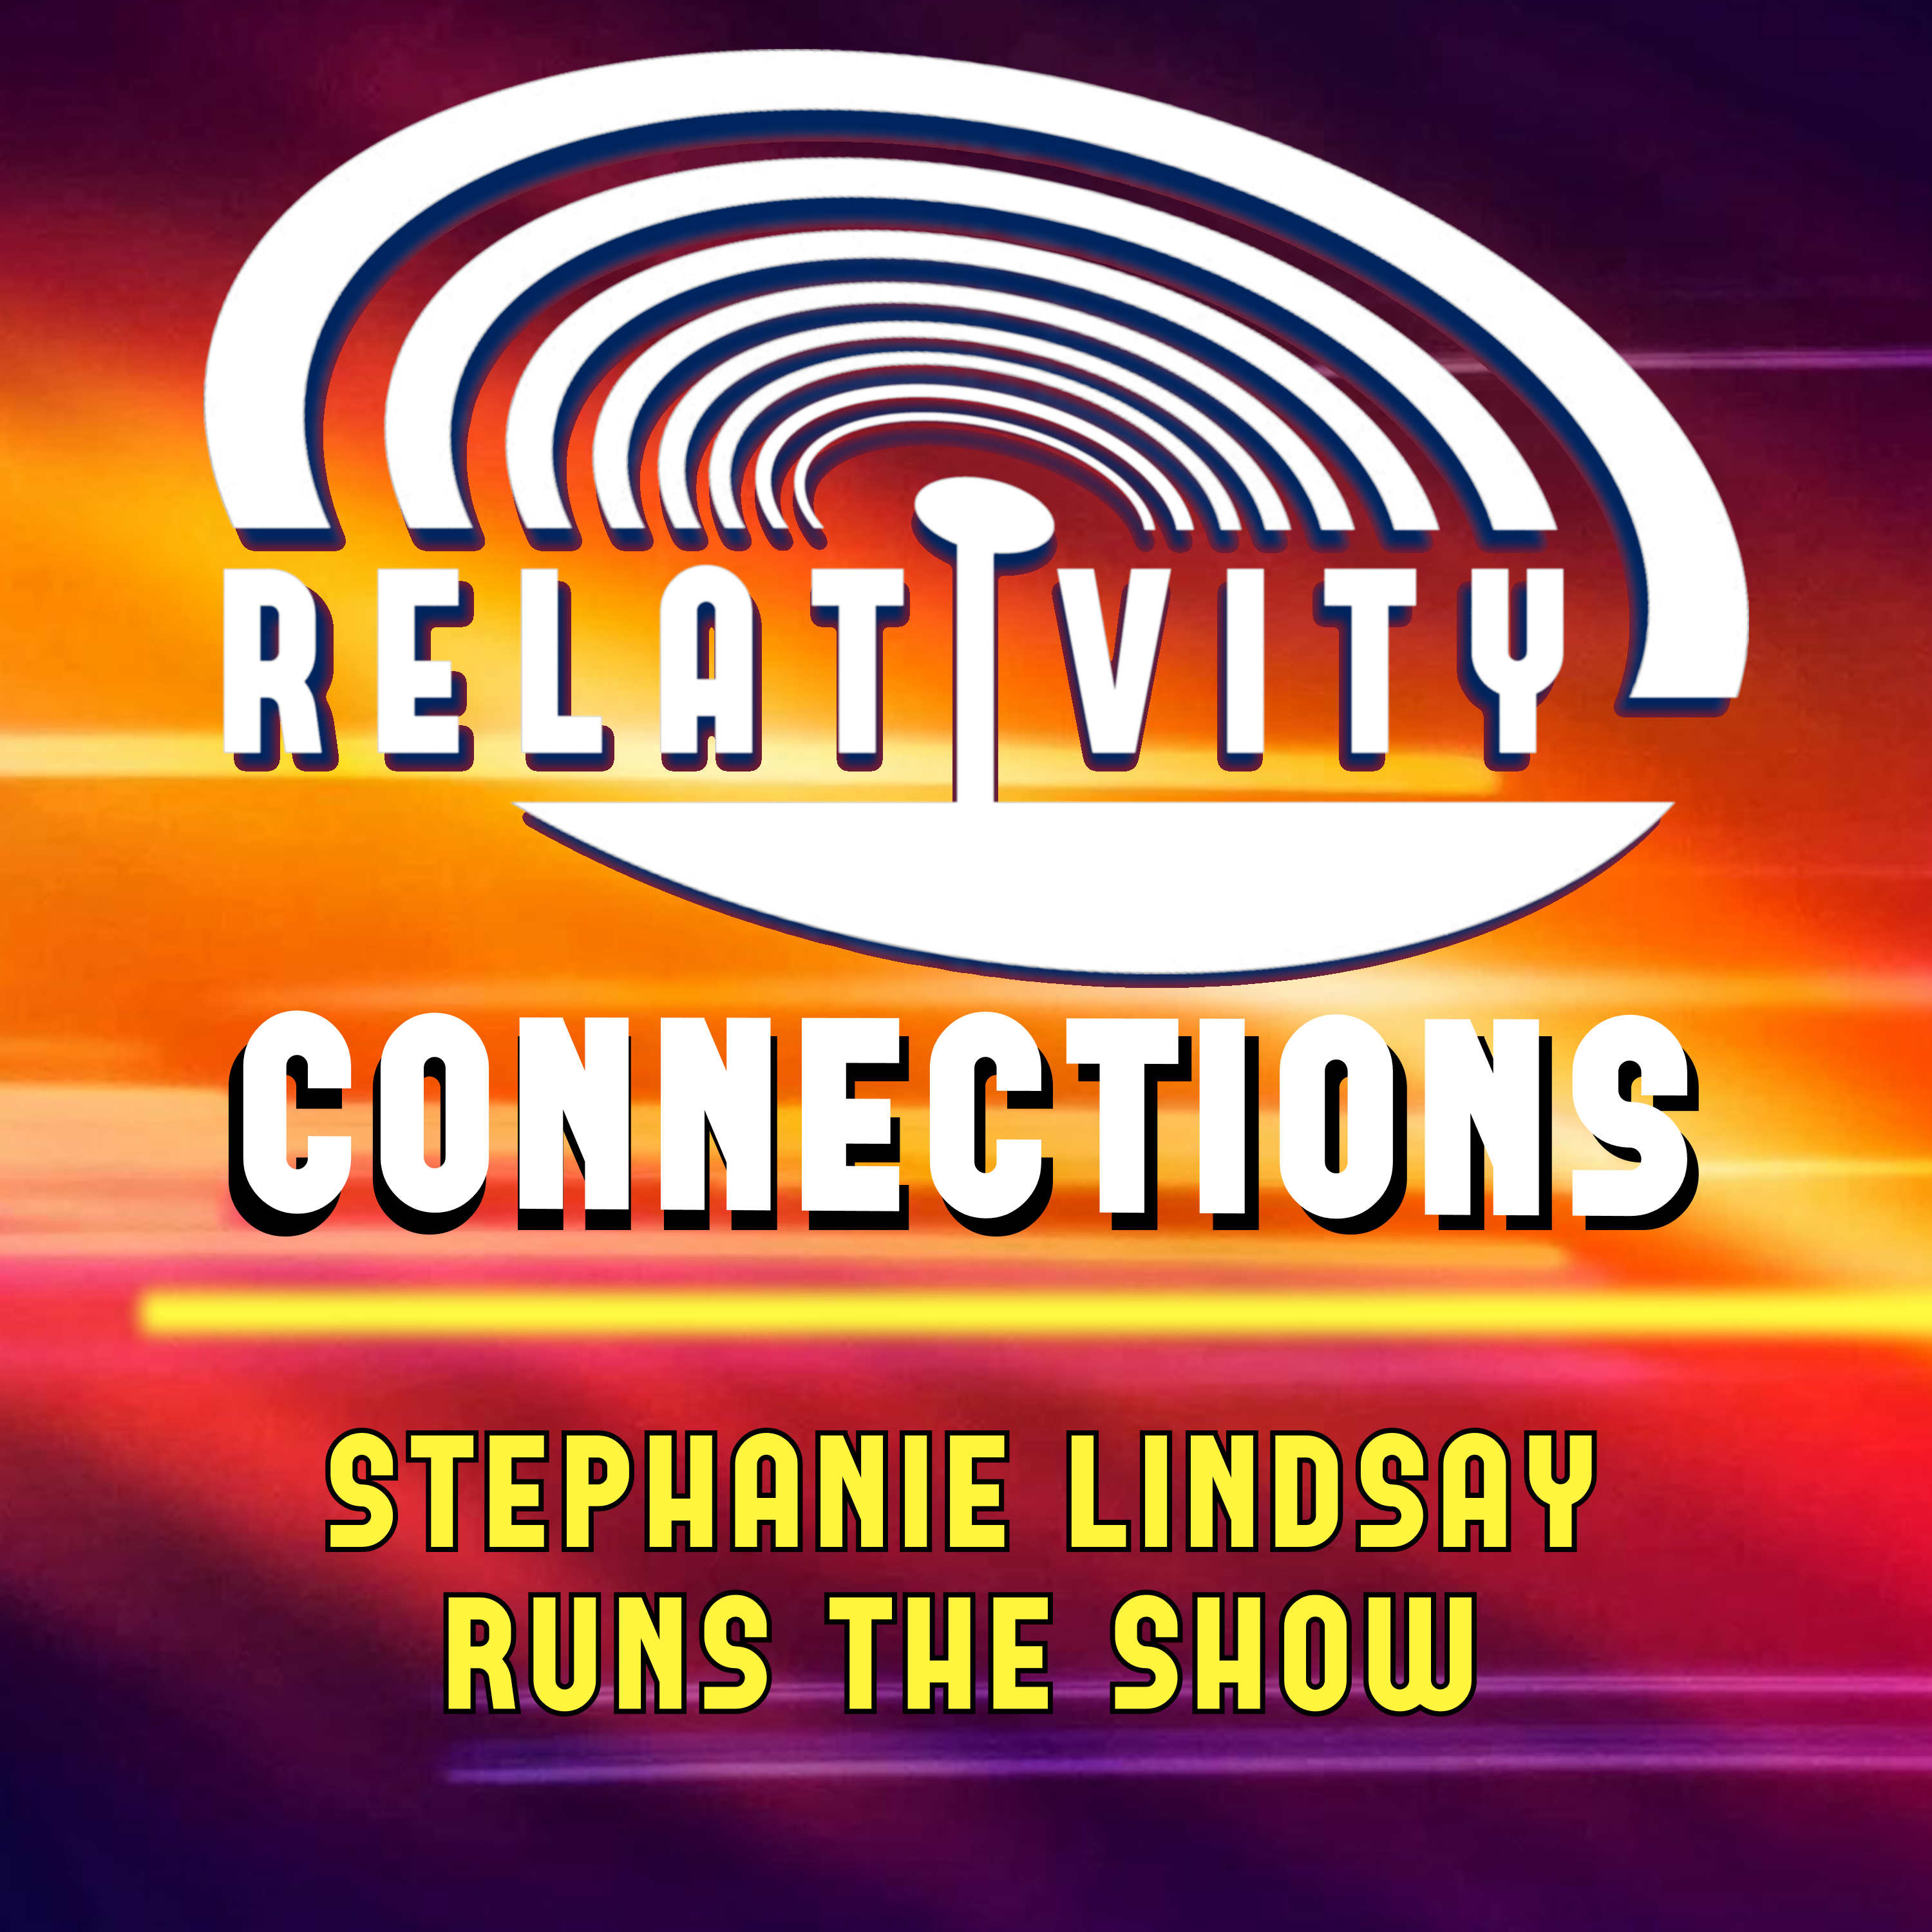 RELATIVITY CONNECTIONS: Stephanie Lindsay